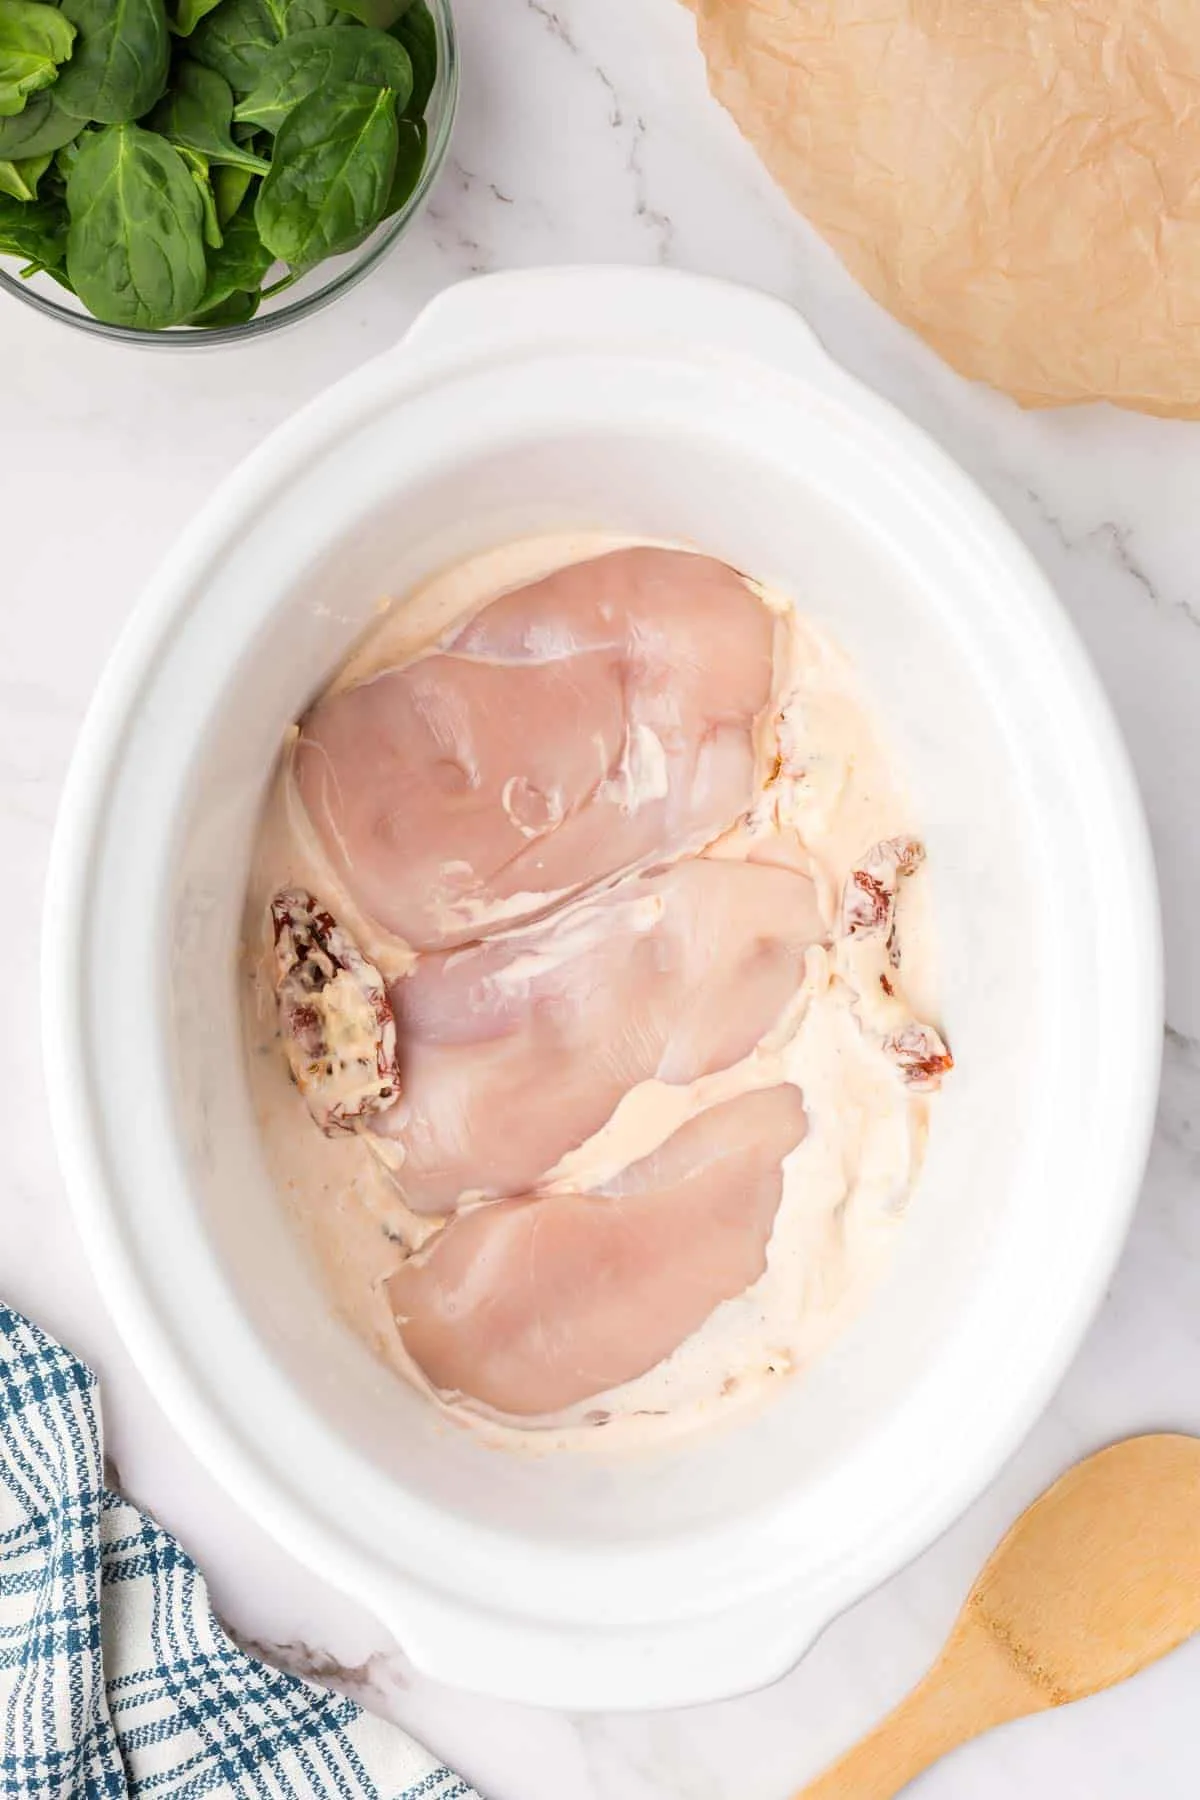 boneless, skinless chicken breasts on top of creamy sauce mixture in a crock pot